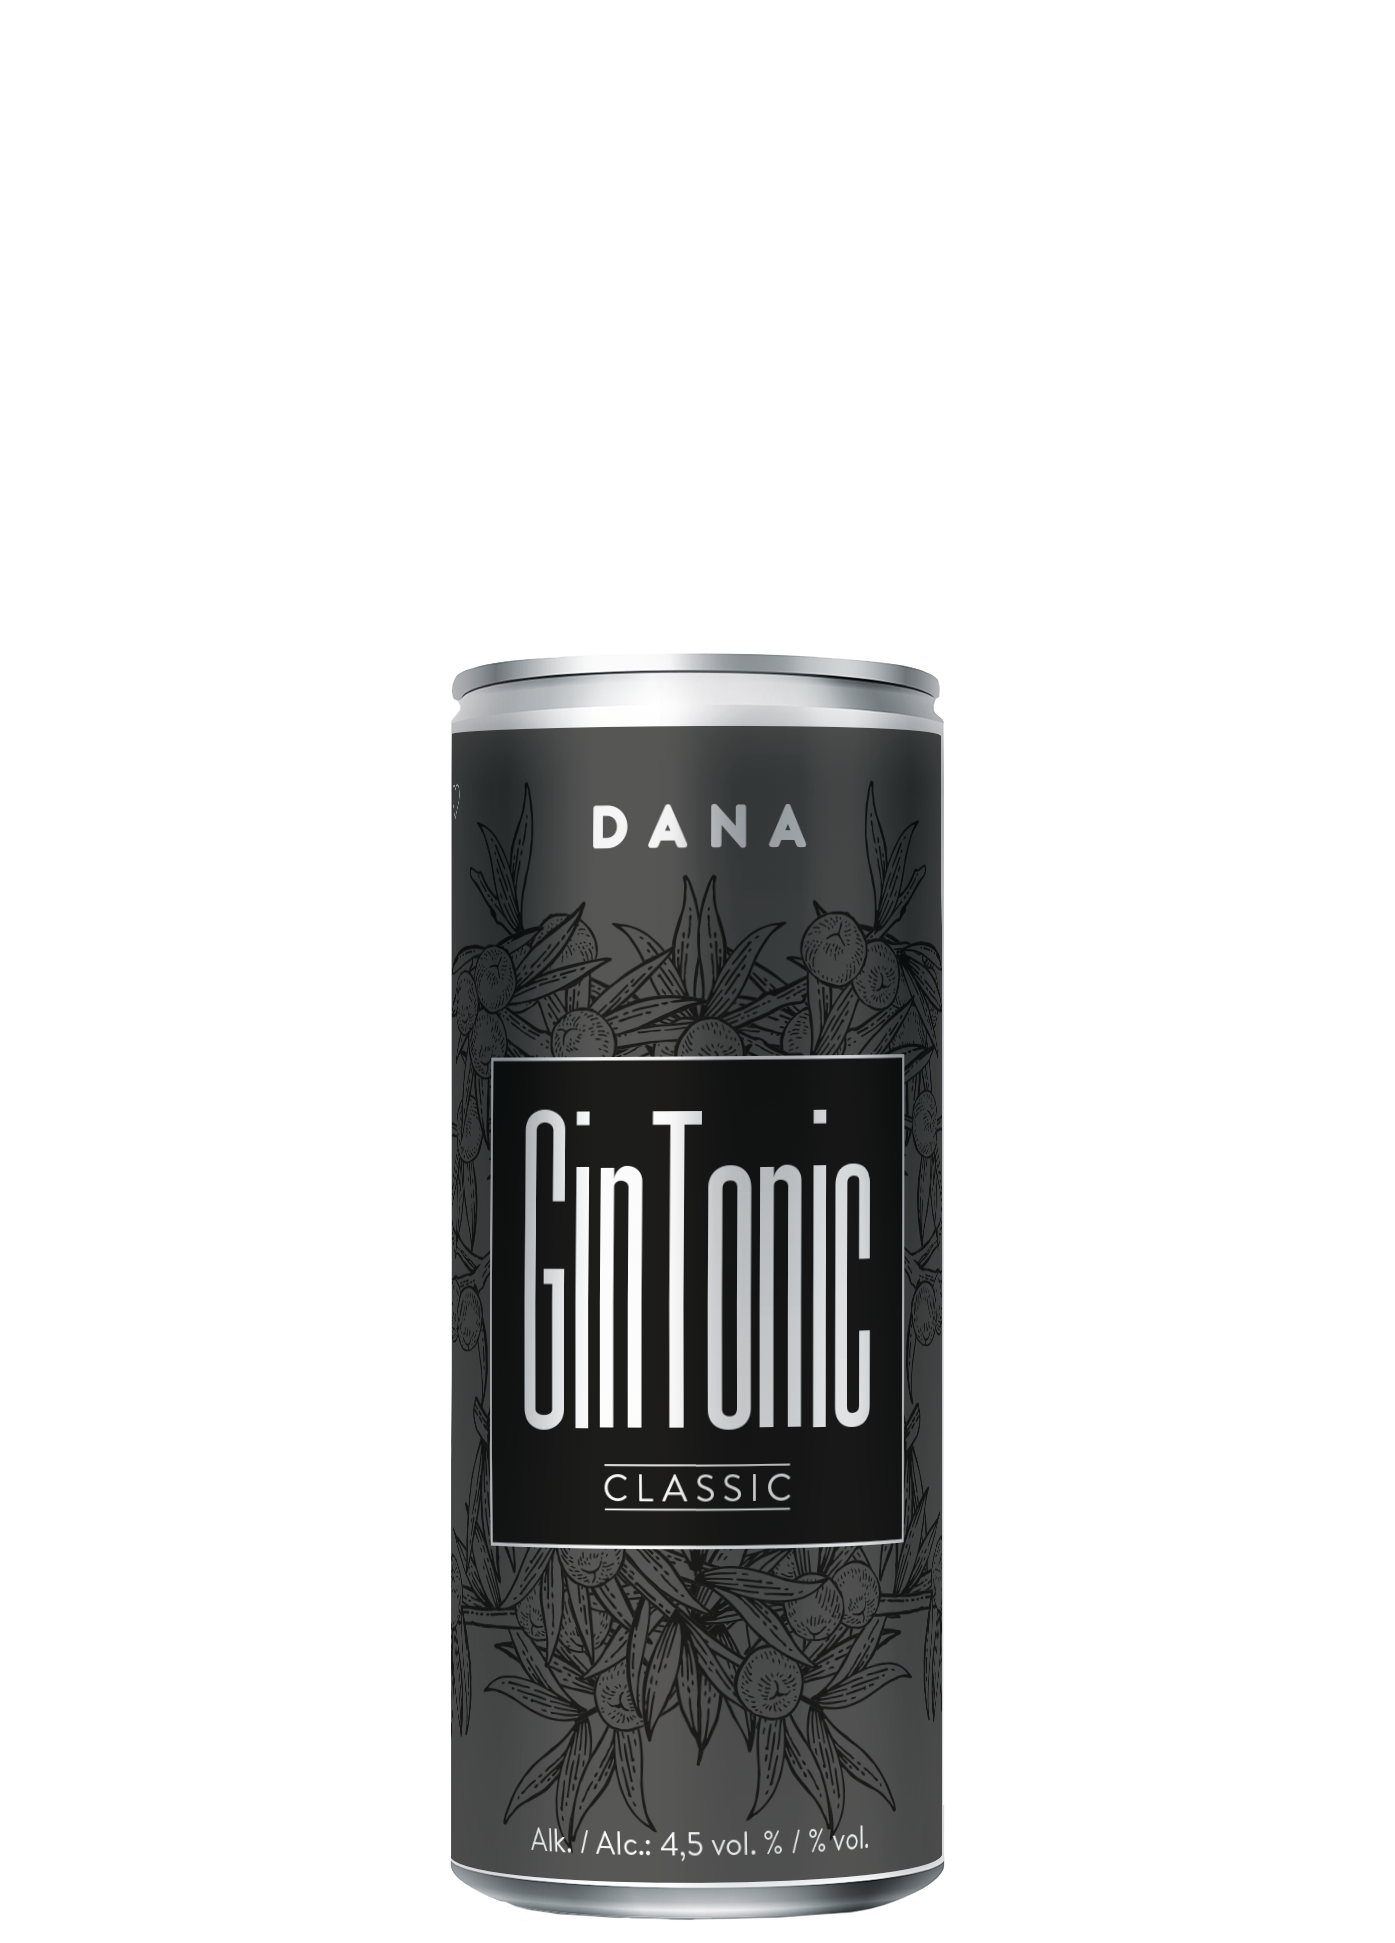 Dana Gin Tonik, classic, alk.: 4,5 % vol.